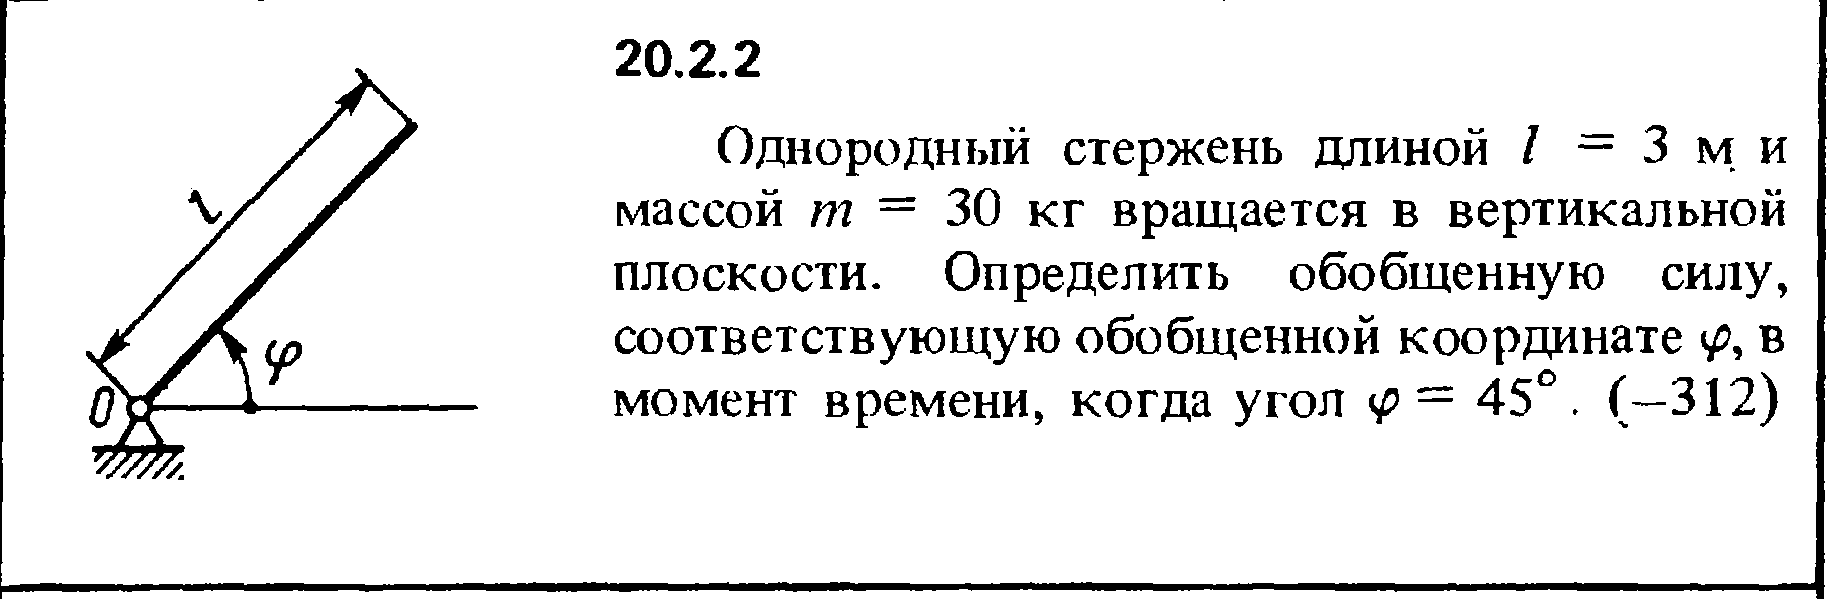 Решение 20.2.2 из сборника (решебника) Кепе О.Е. 1989